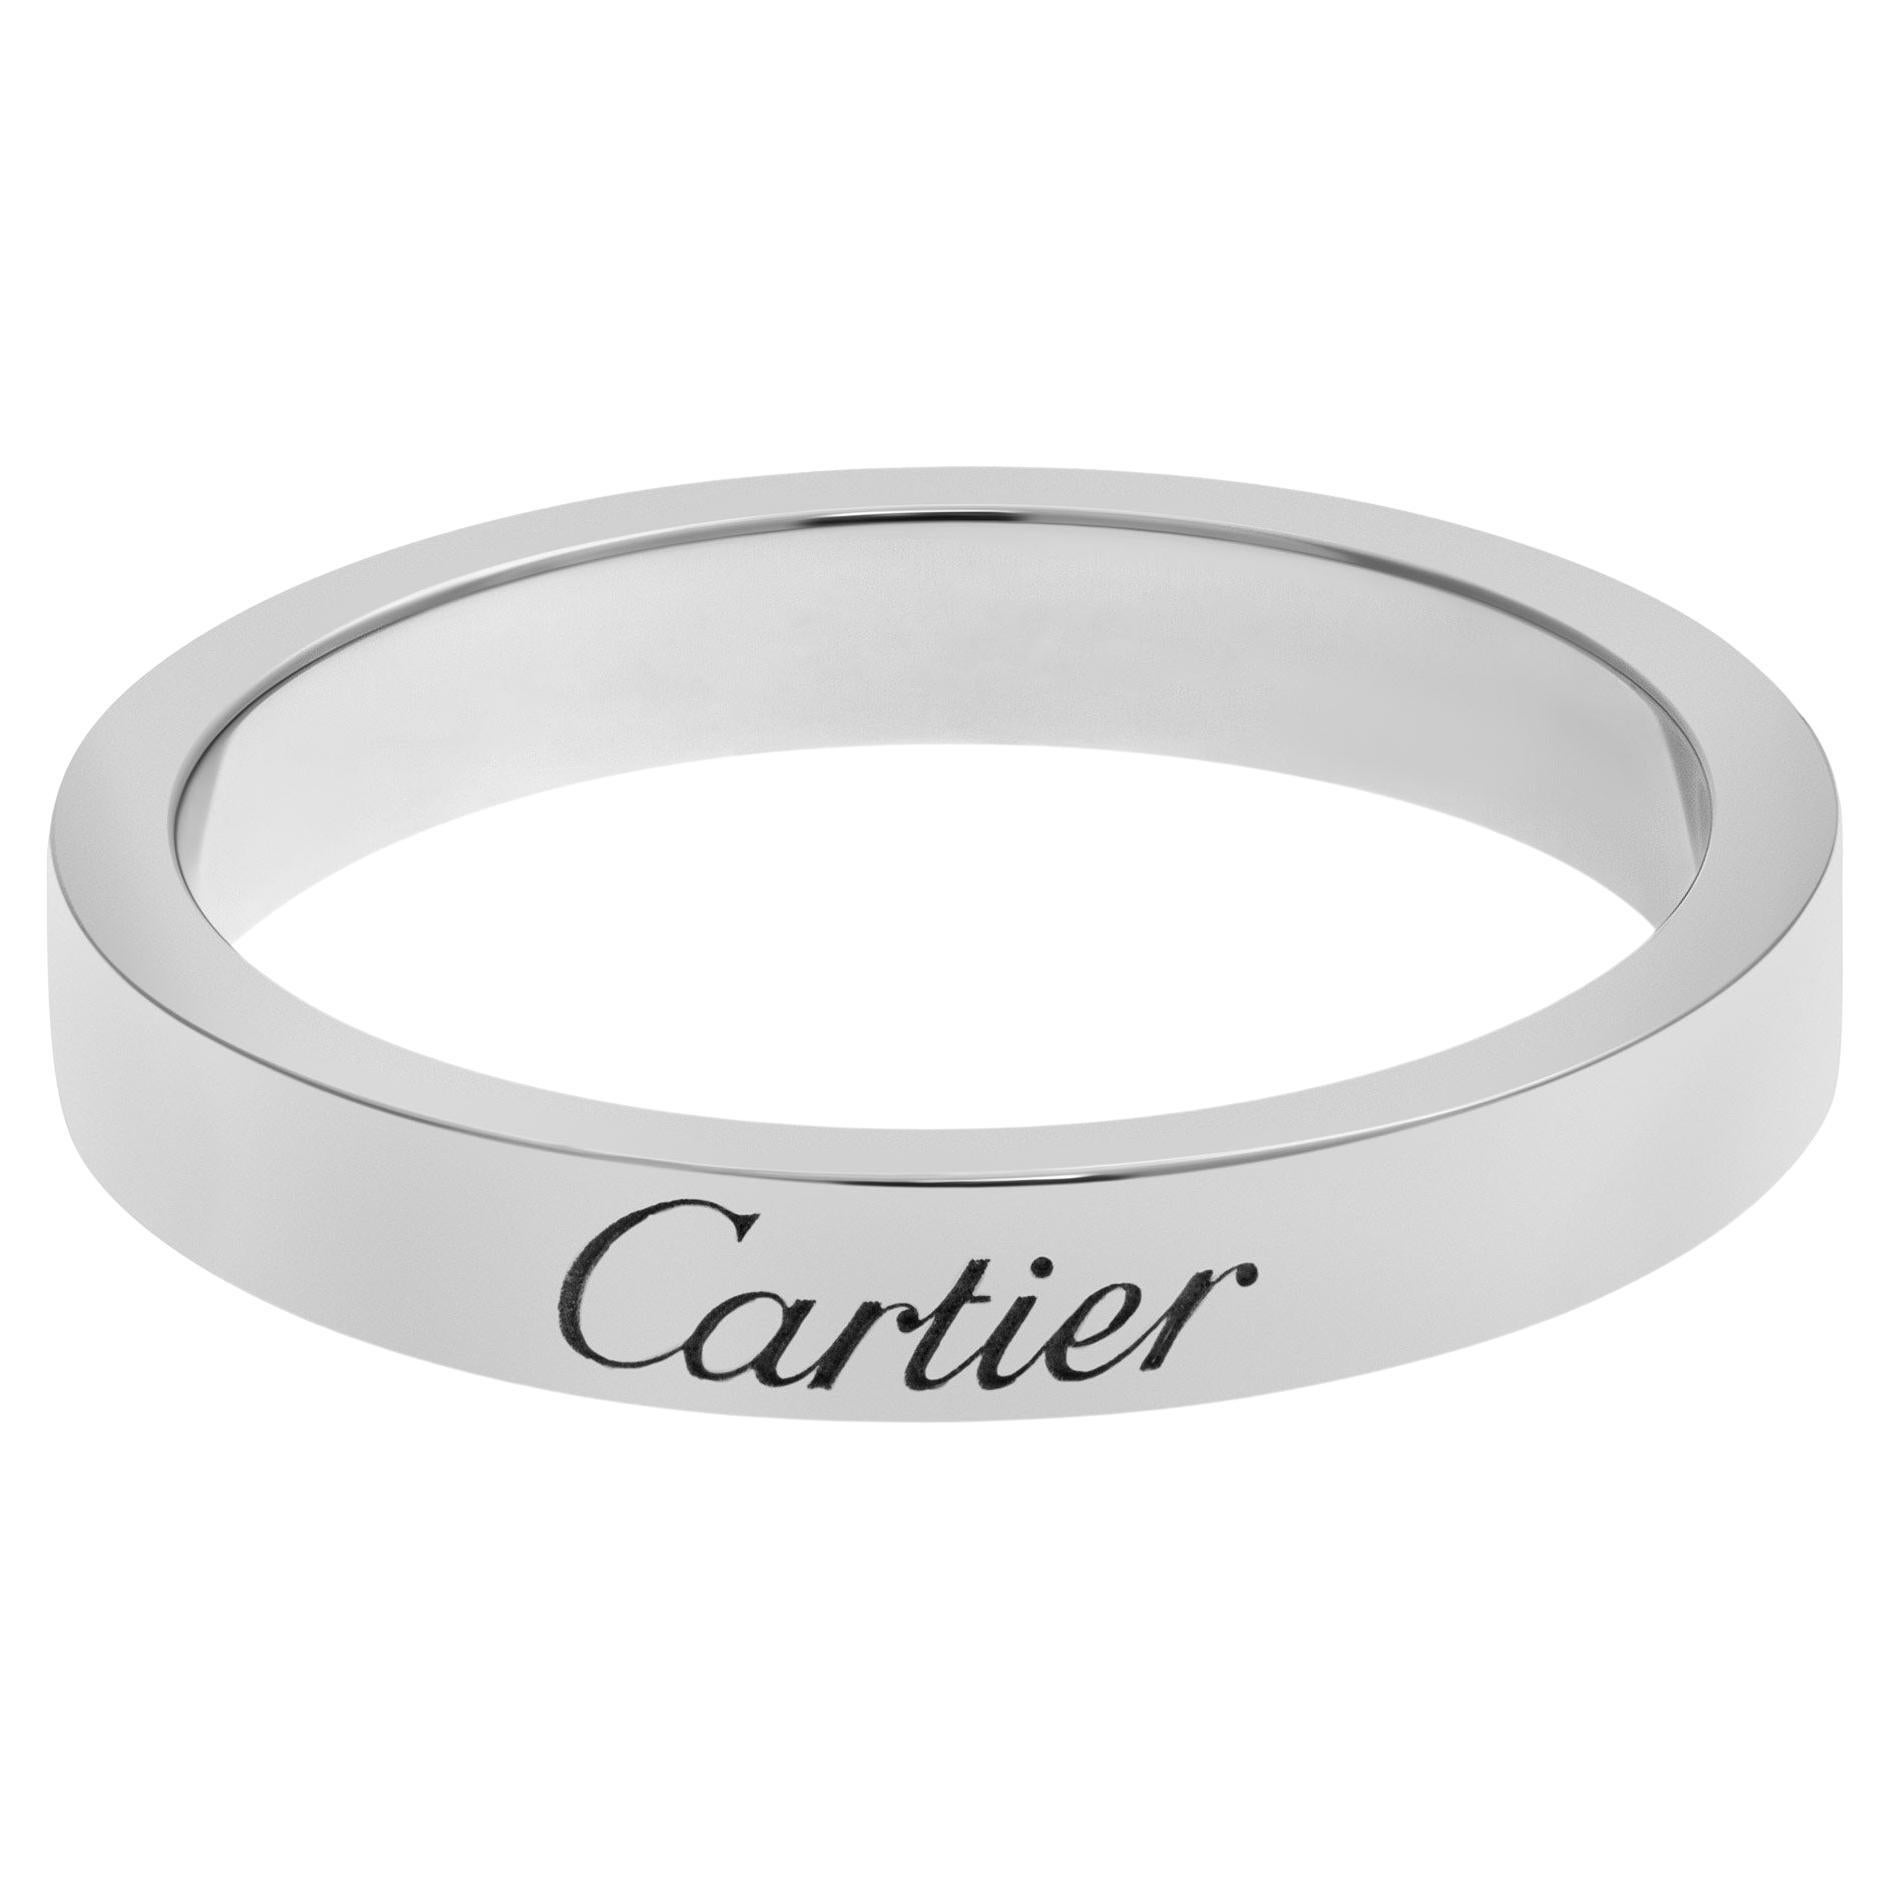 C De Cartier Wedding Band in Platinum